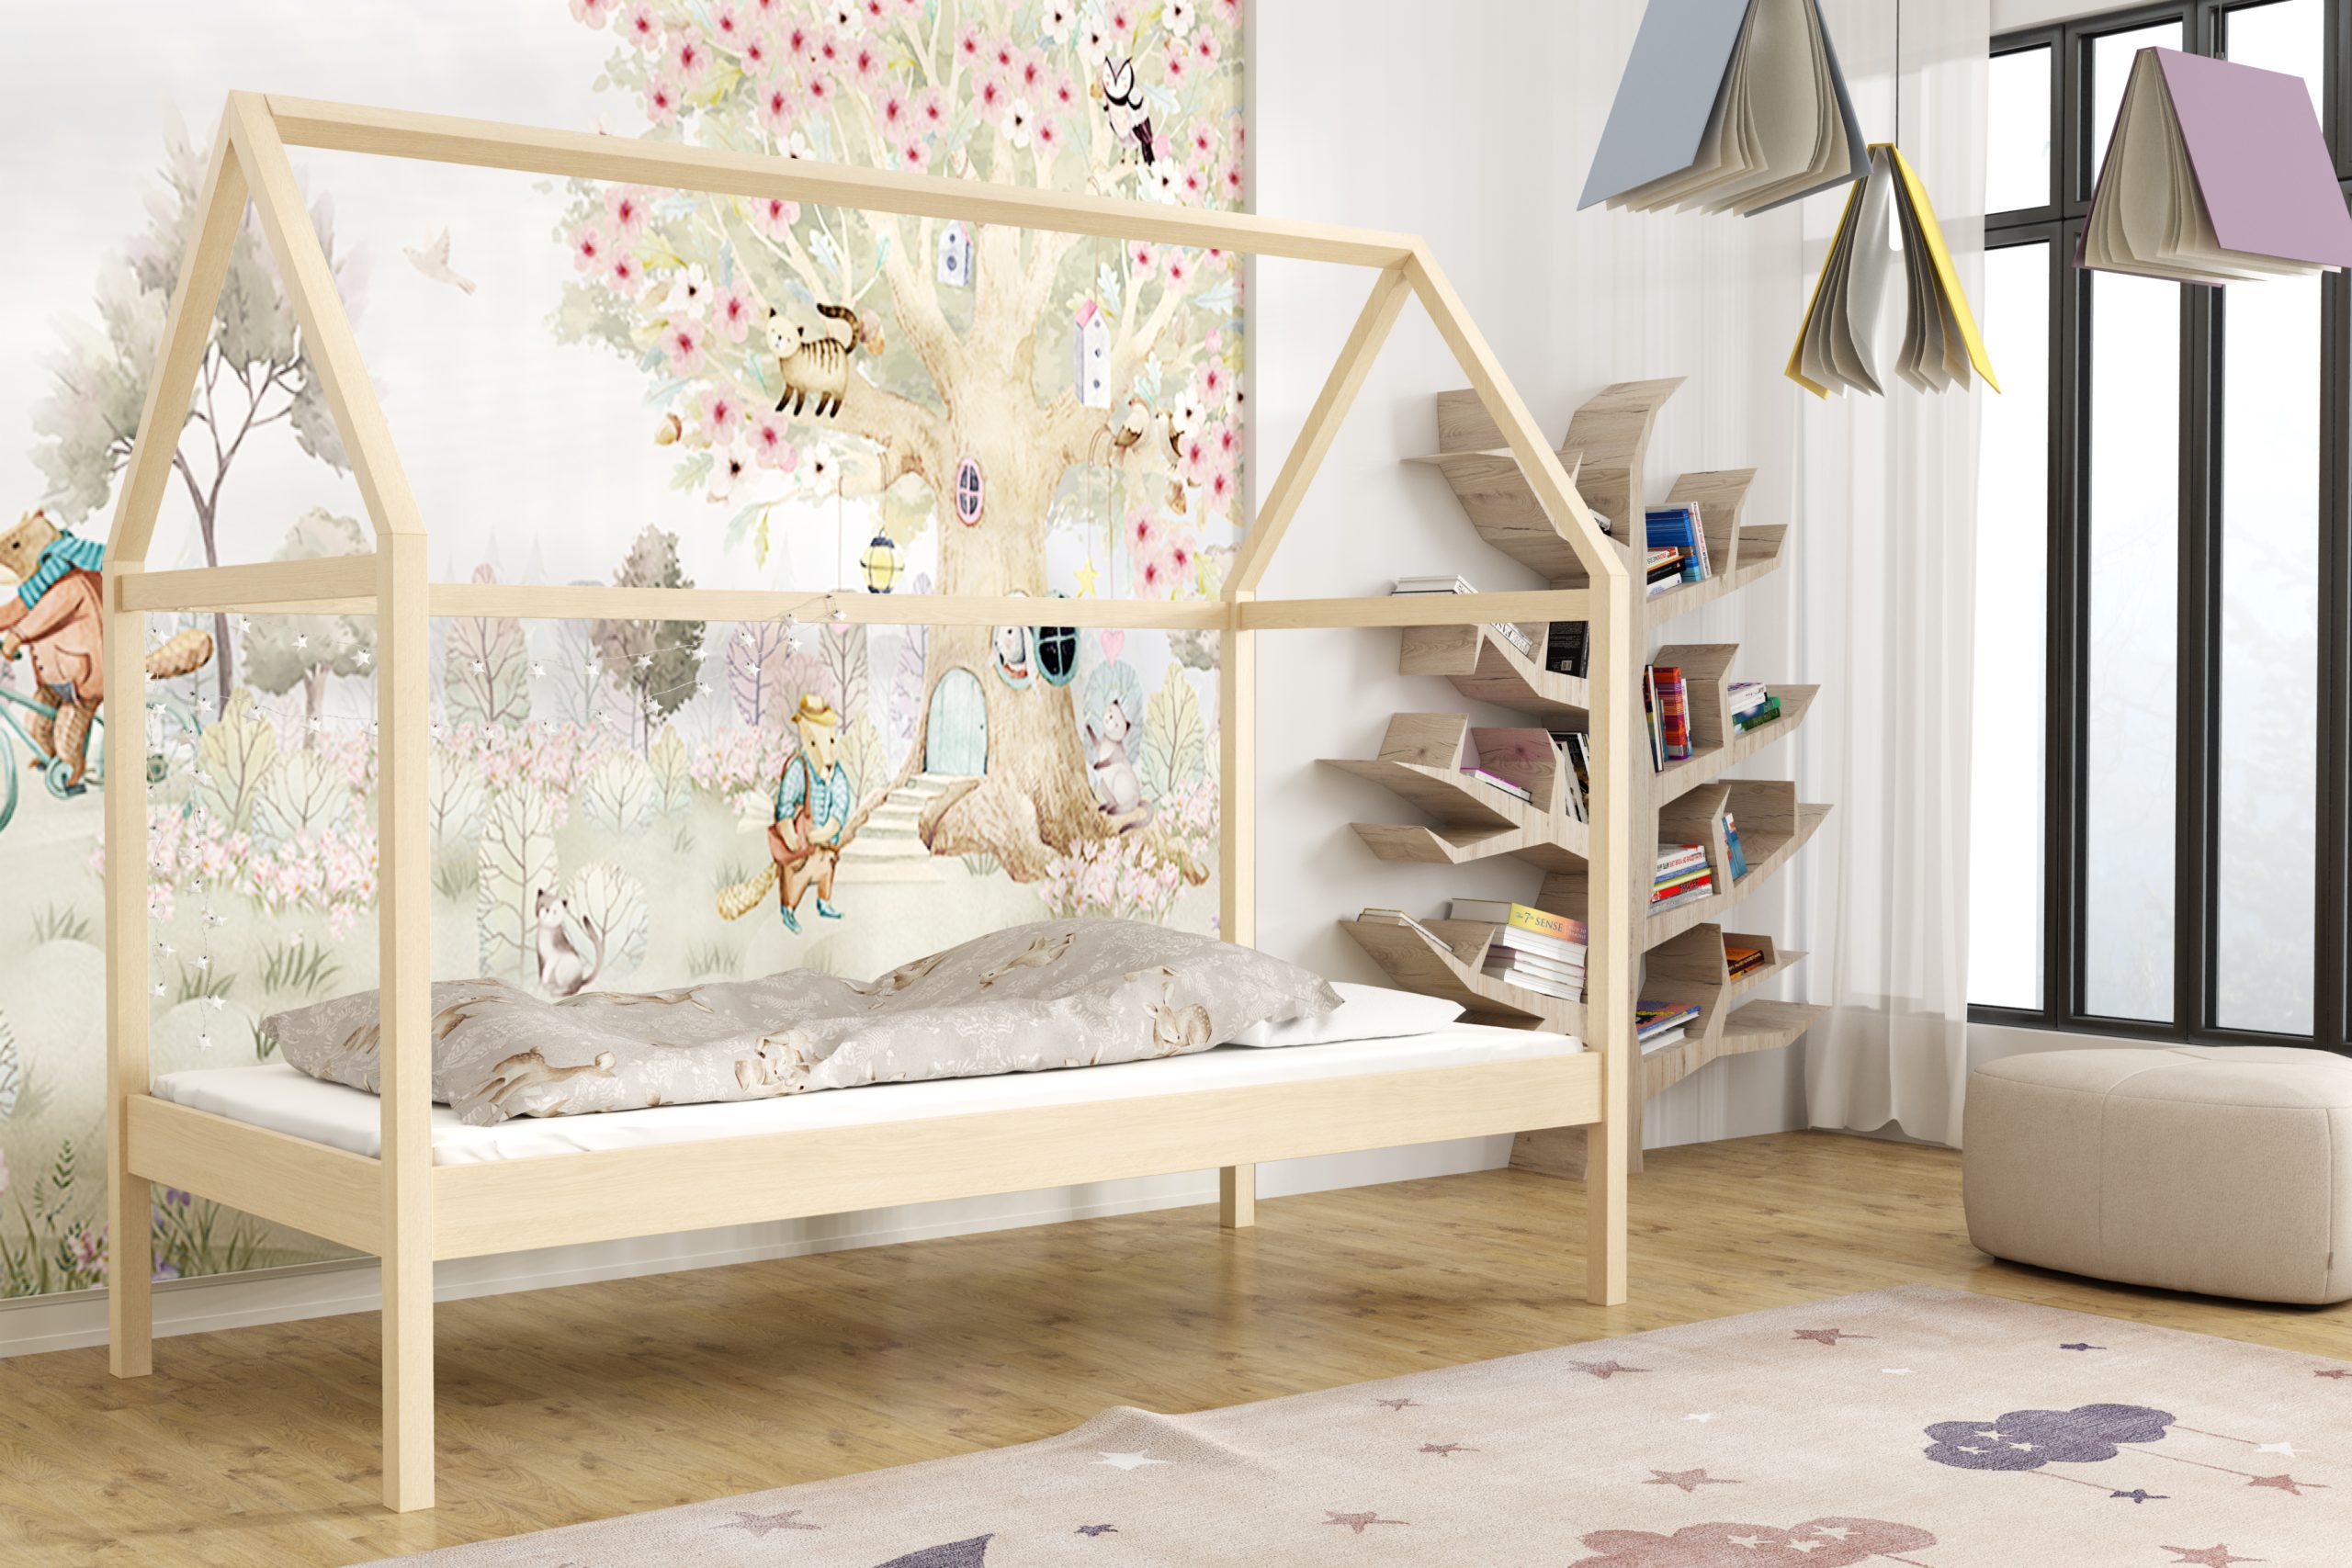 Dětská postel NEEKO KIDBED ONE ze dřeva + rošt Barva: surové dřevo, Rozměr: 70 x 140 cm, Zásuvky: ano